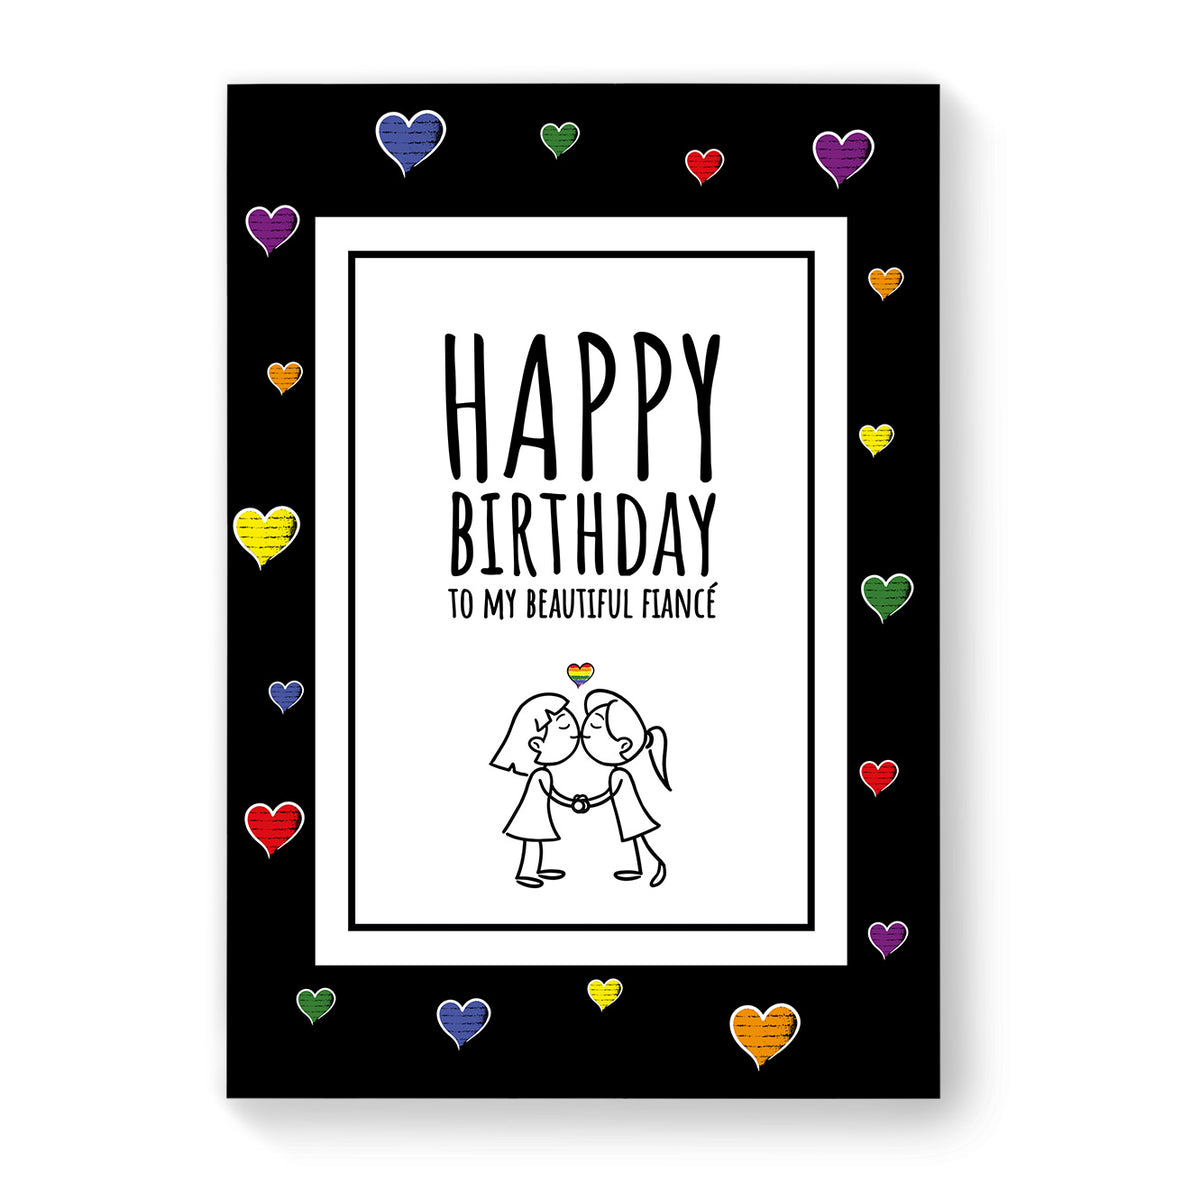 Happy Birthday to my beautiful fiancé - Lesbian Gay Birthday Card - Black Heart | Gift